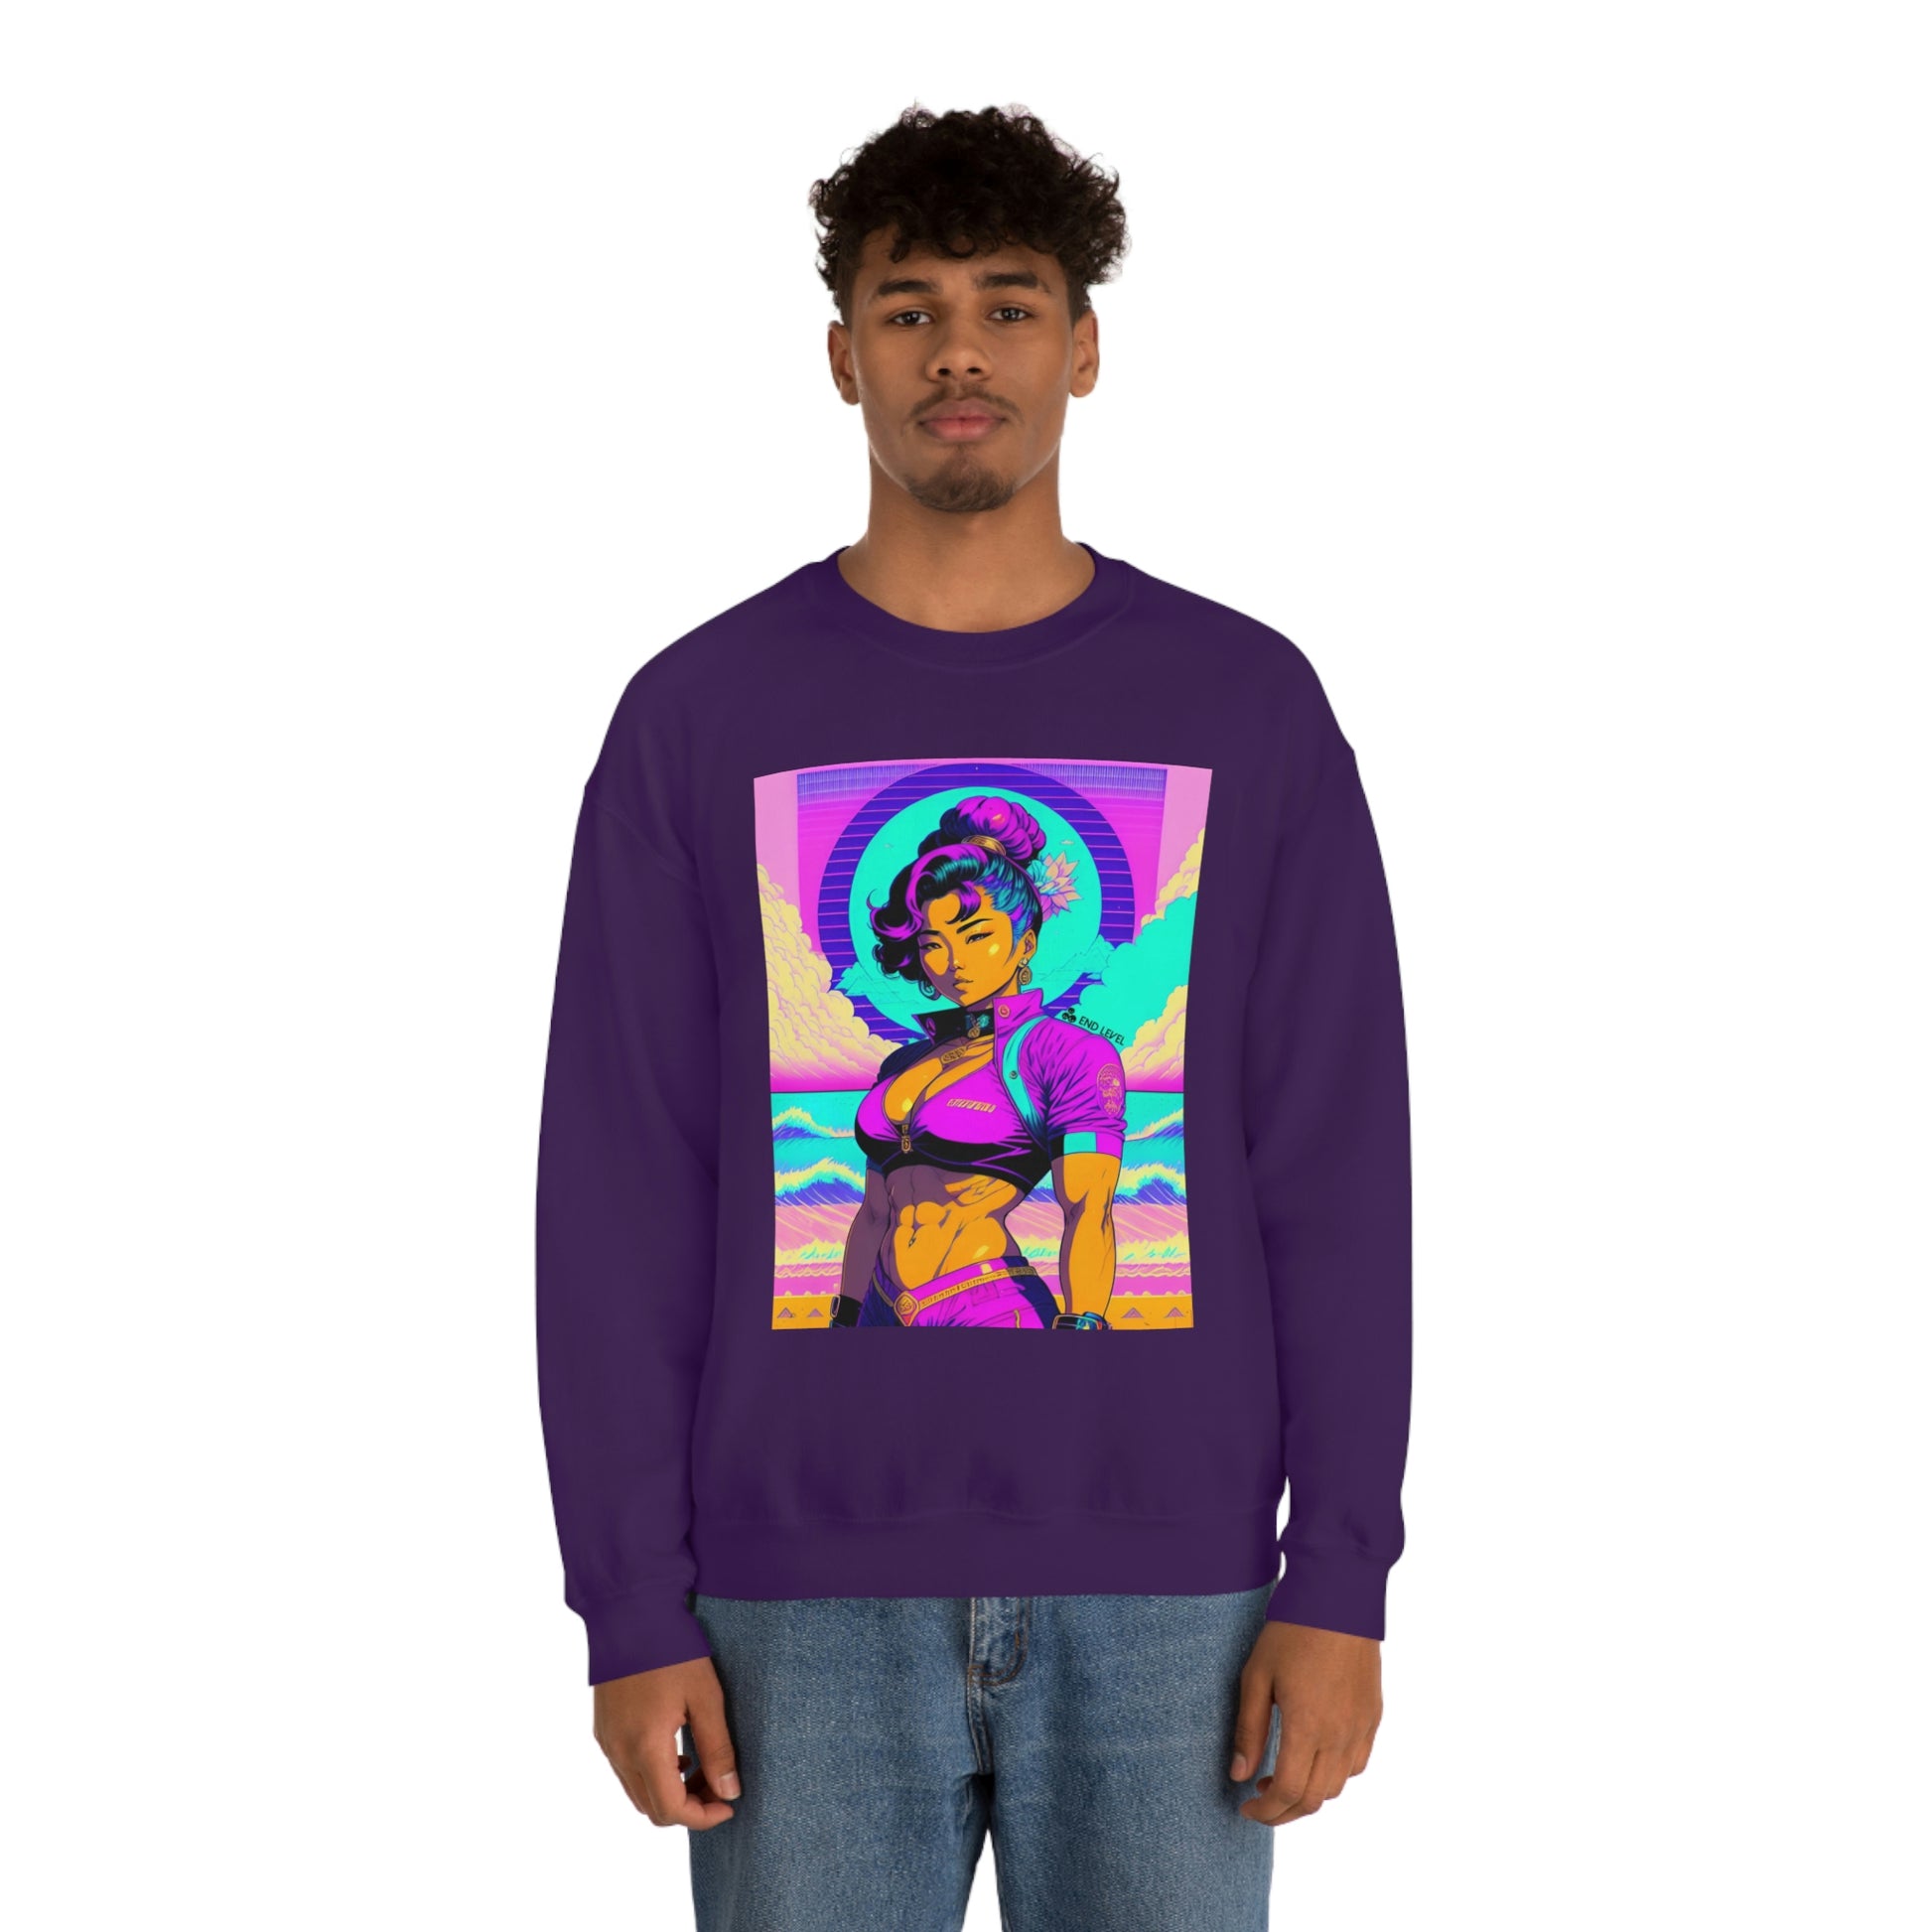 Man wearing purple Lady Lotus sweatshirt with blue jeans.